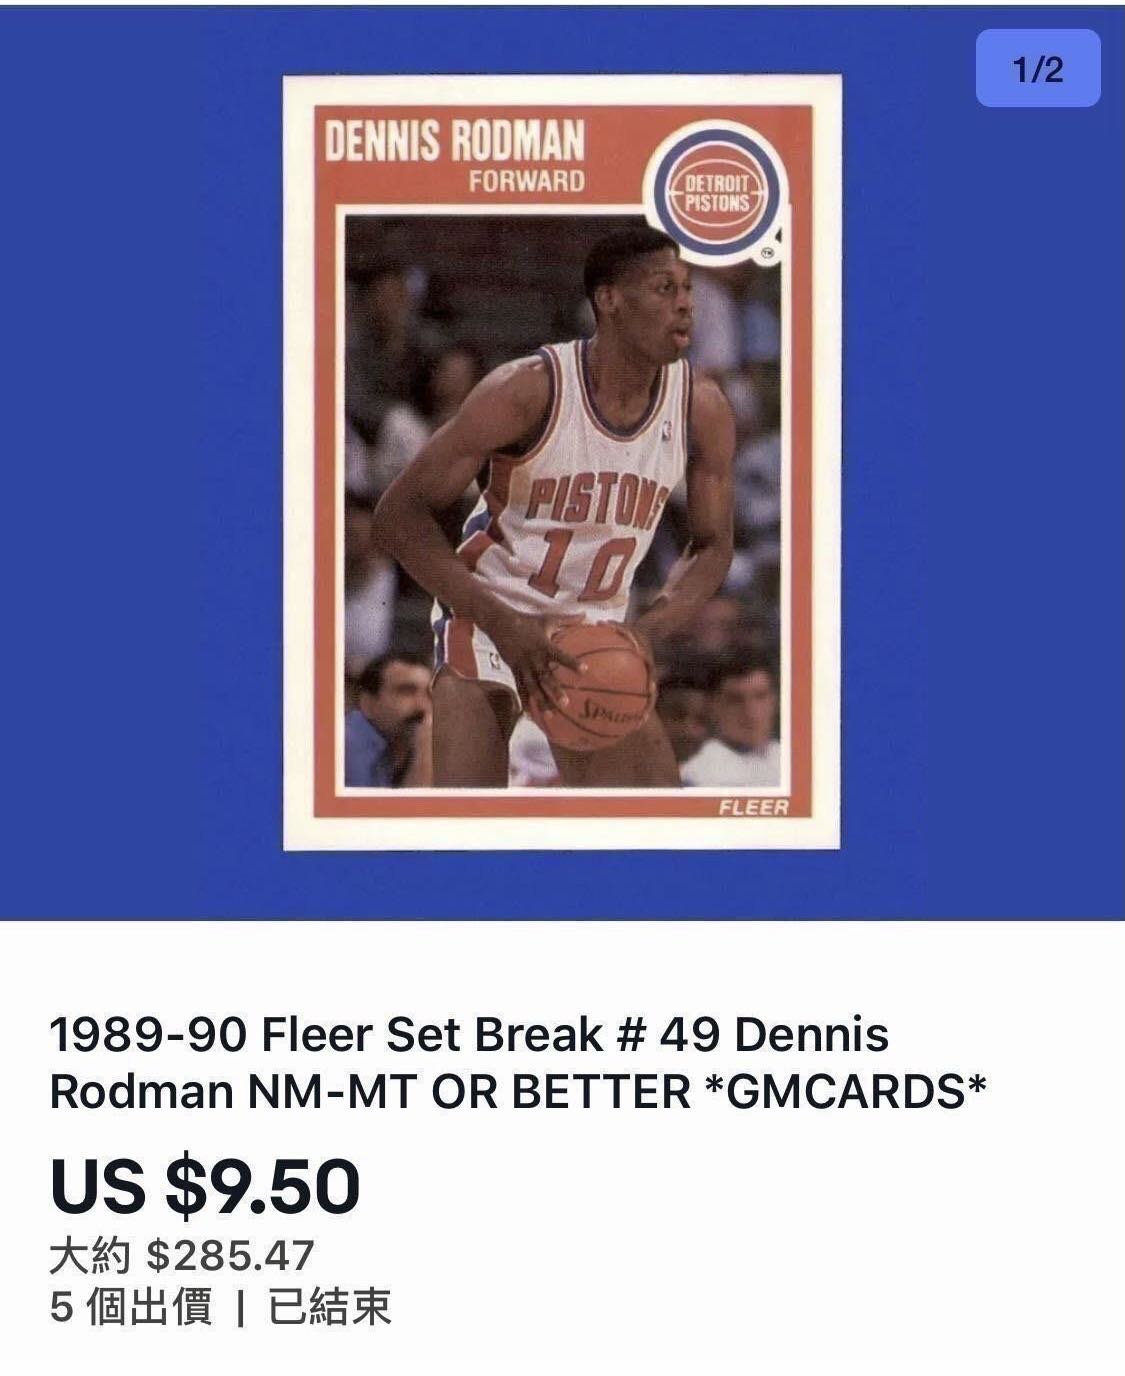 Dennis Rodman 1989-90 Fleer Autographed Card #49 - BAS